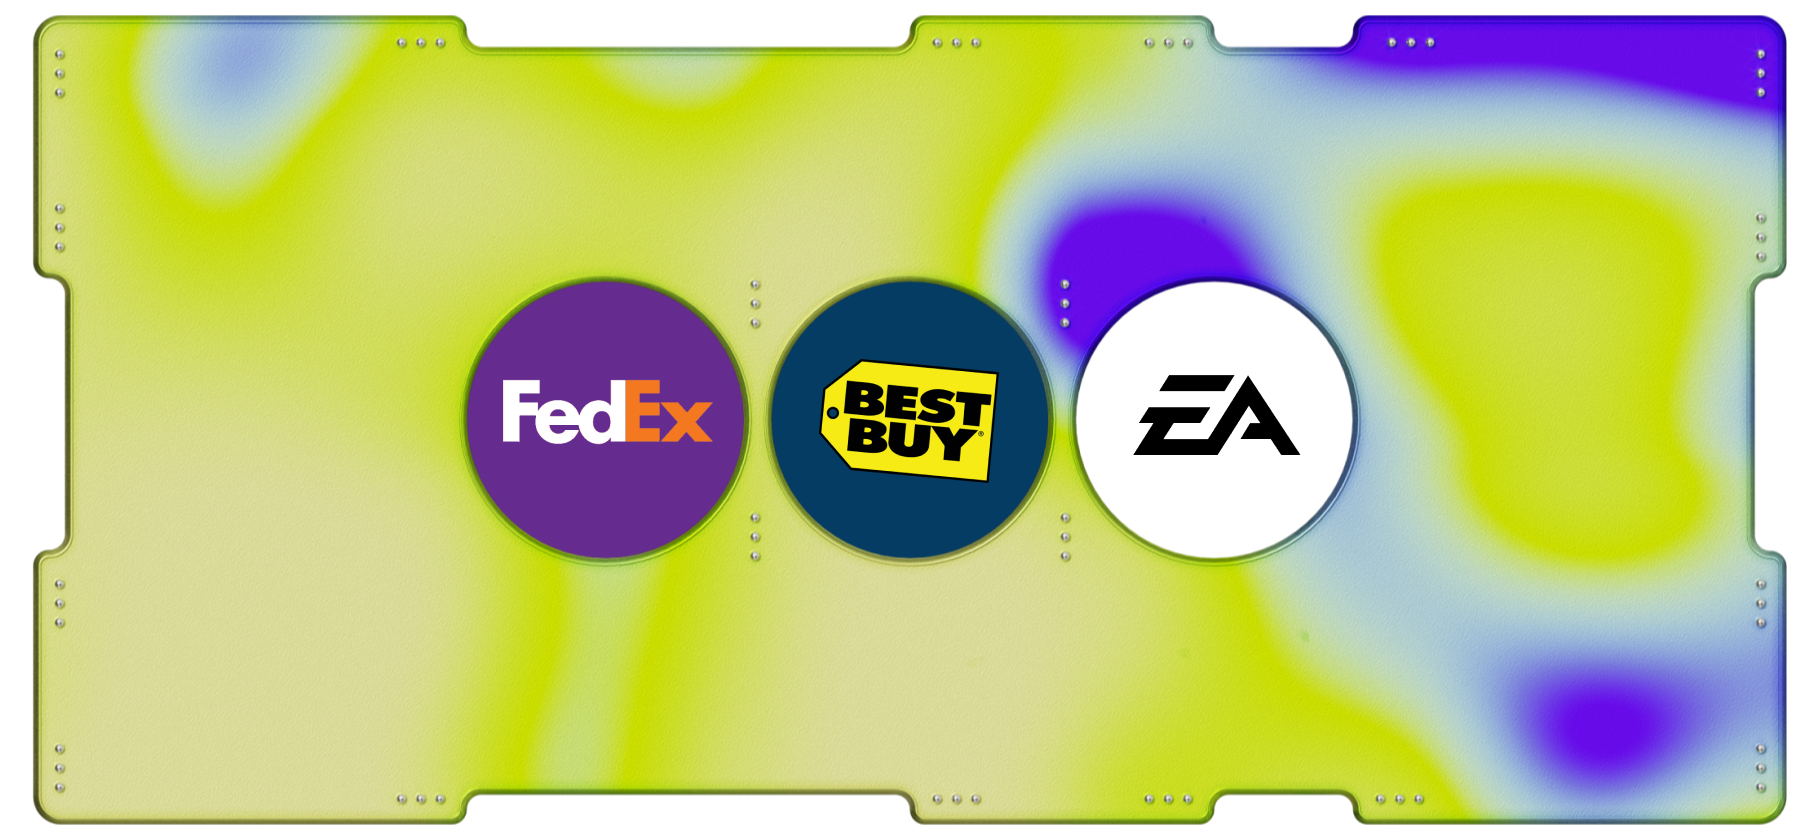 Календарь инвестора: FedEx, Best Buy и Electronic Arts заплатят дивиденды